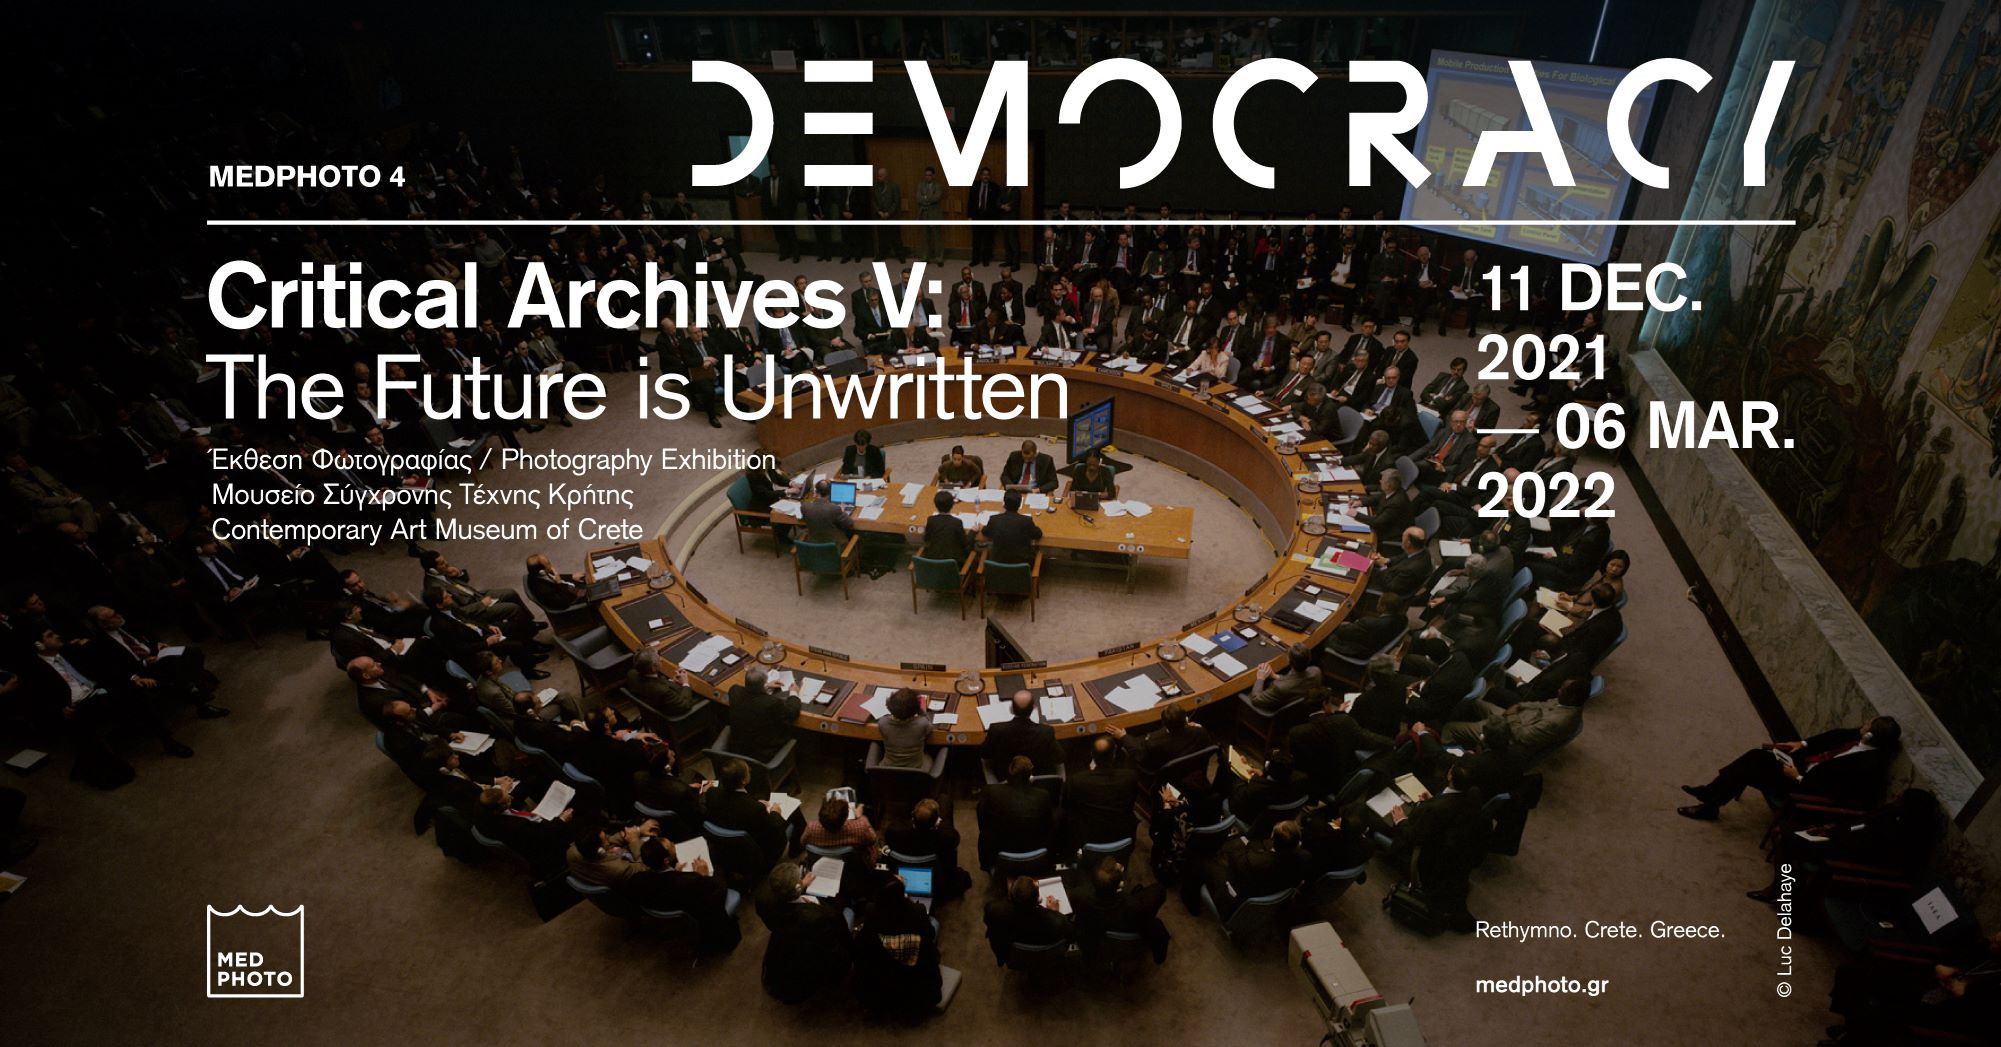 MedPhoto 4: Democracy – The Future is Unwritten